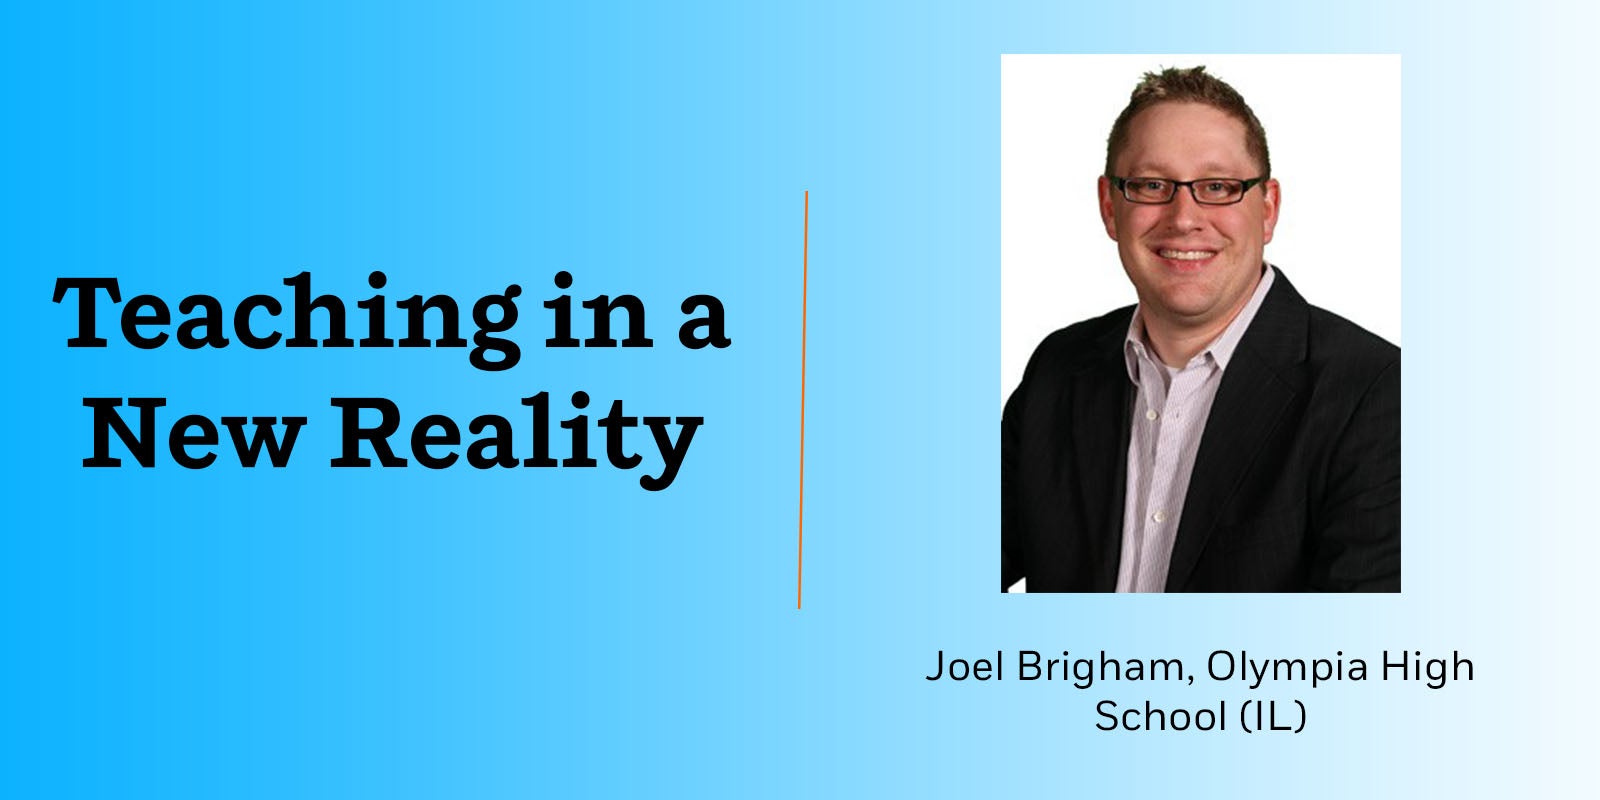 Teaching in a New Reality: Joel Brigham, Olympia High School (IL)